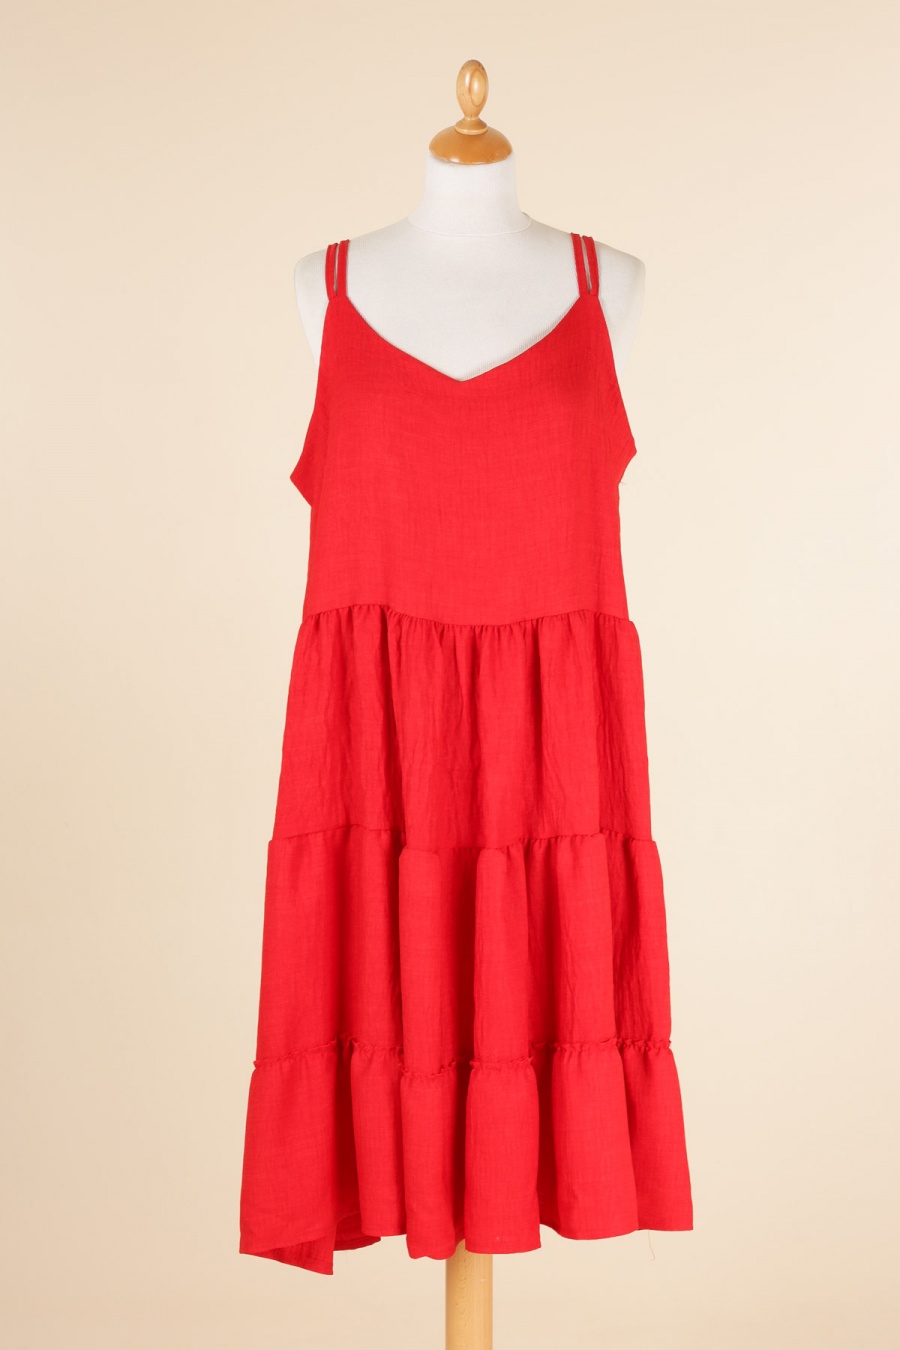 robe  grande taille rouge 46 au 60 marque 2w paris r1523